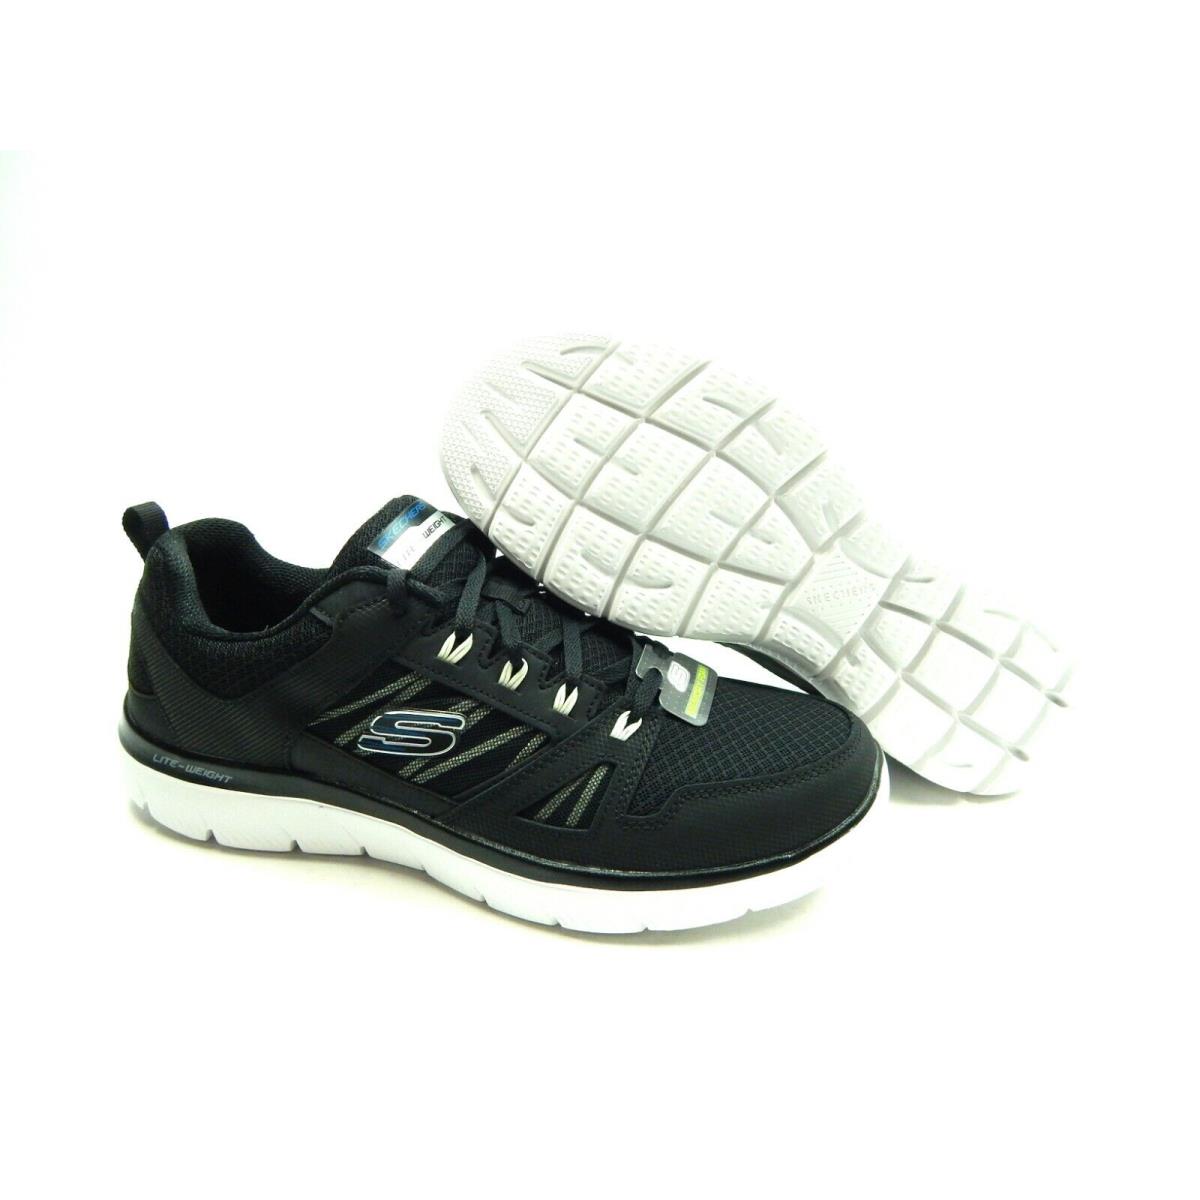 Skechers shoes SUMMITS - Black 5